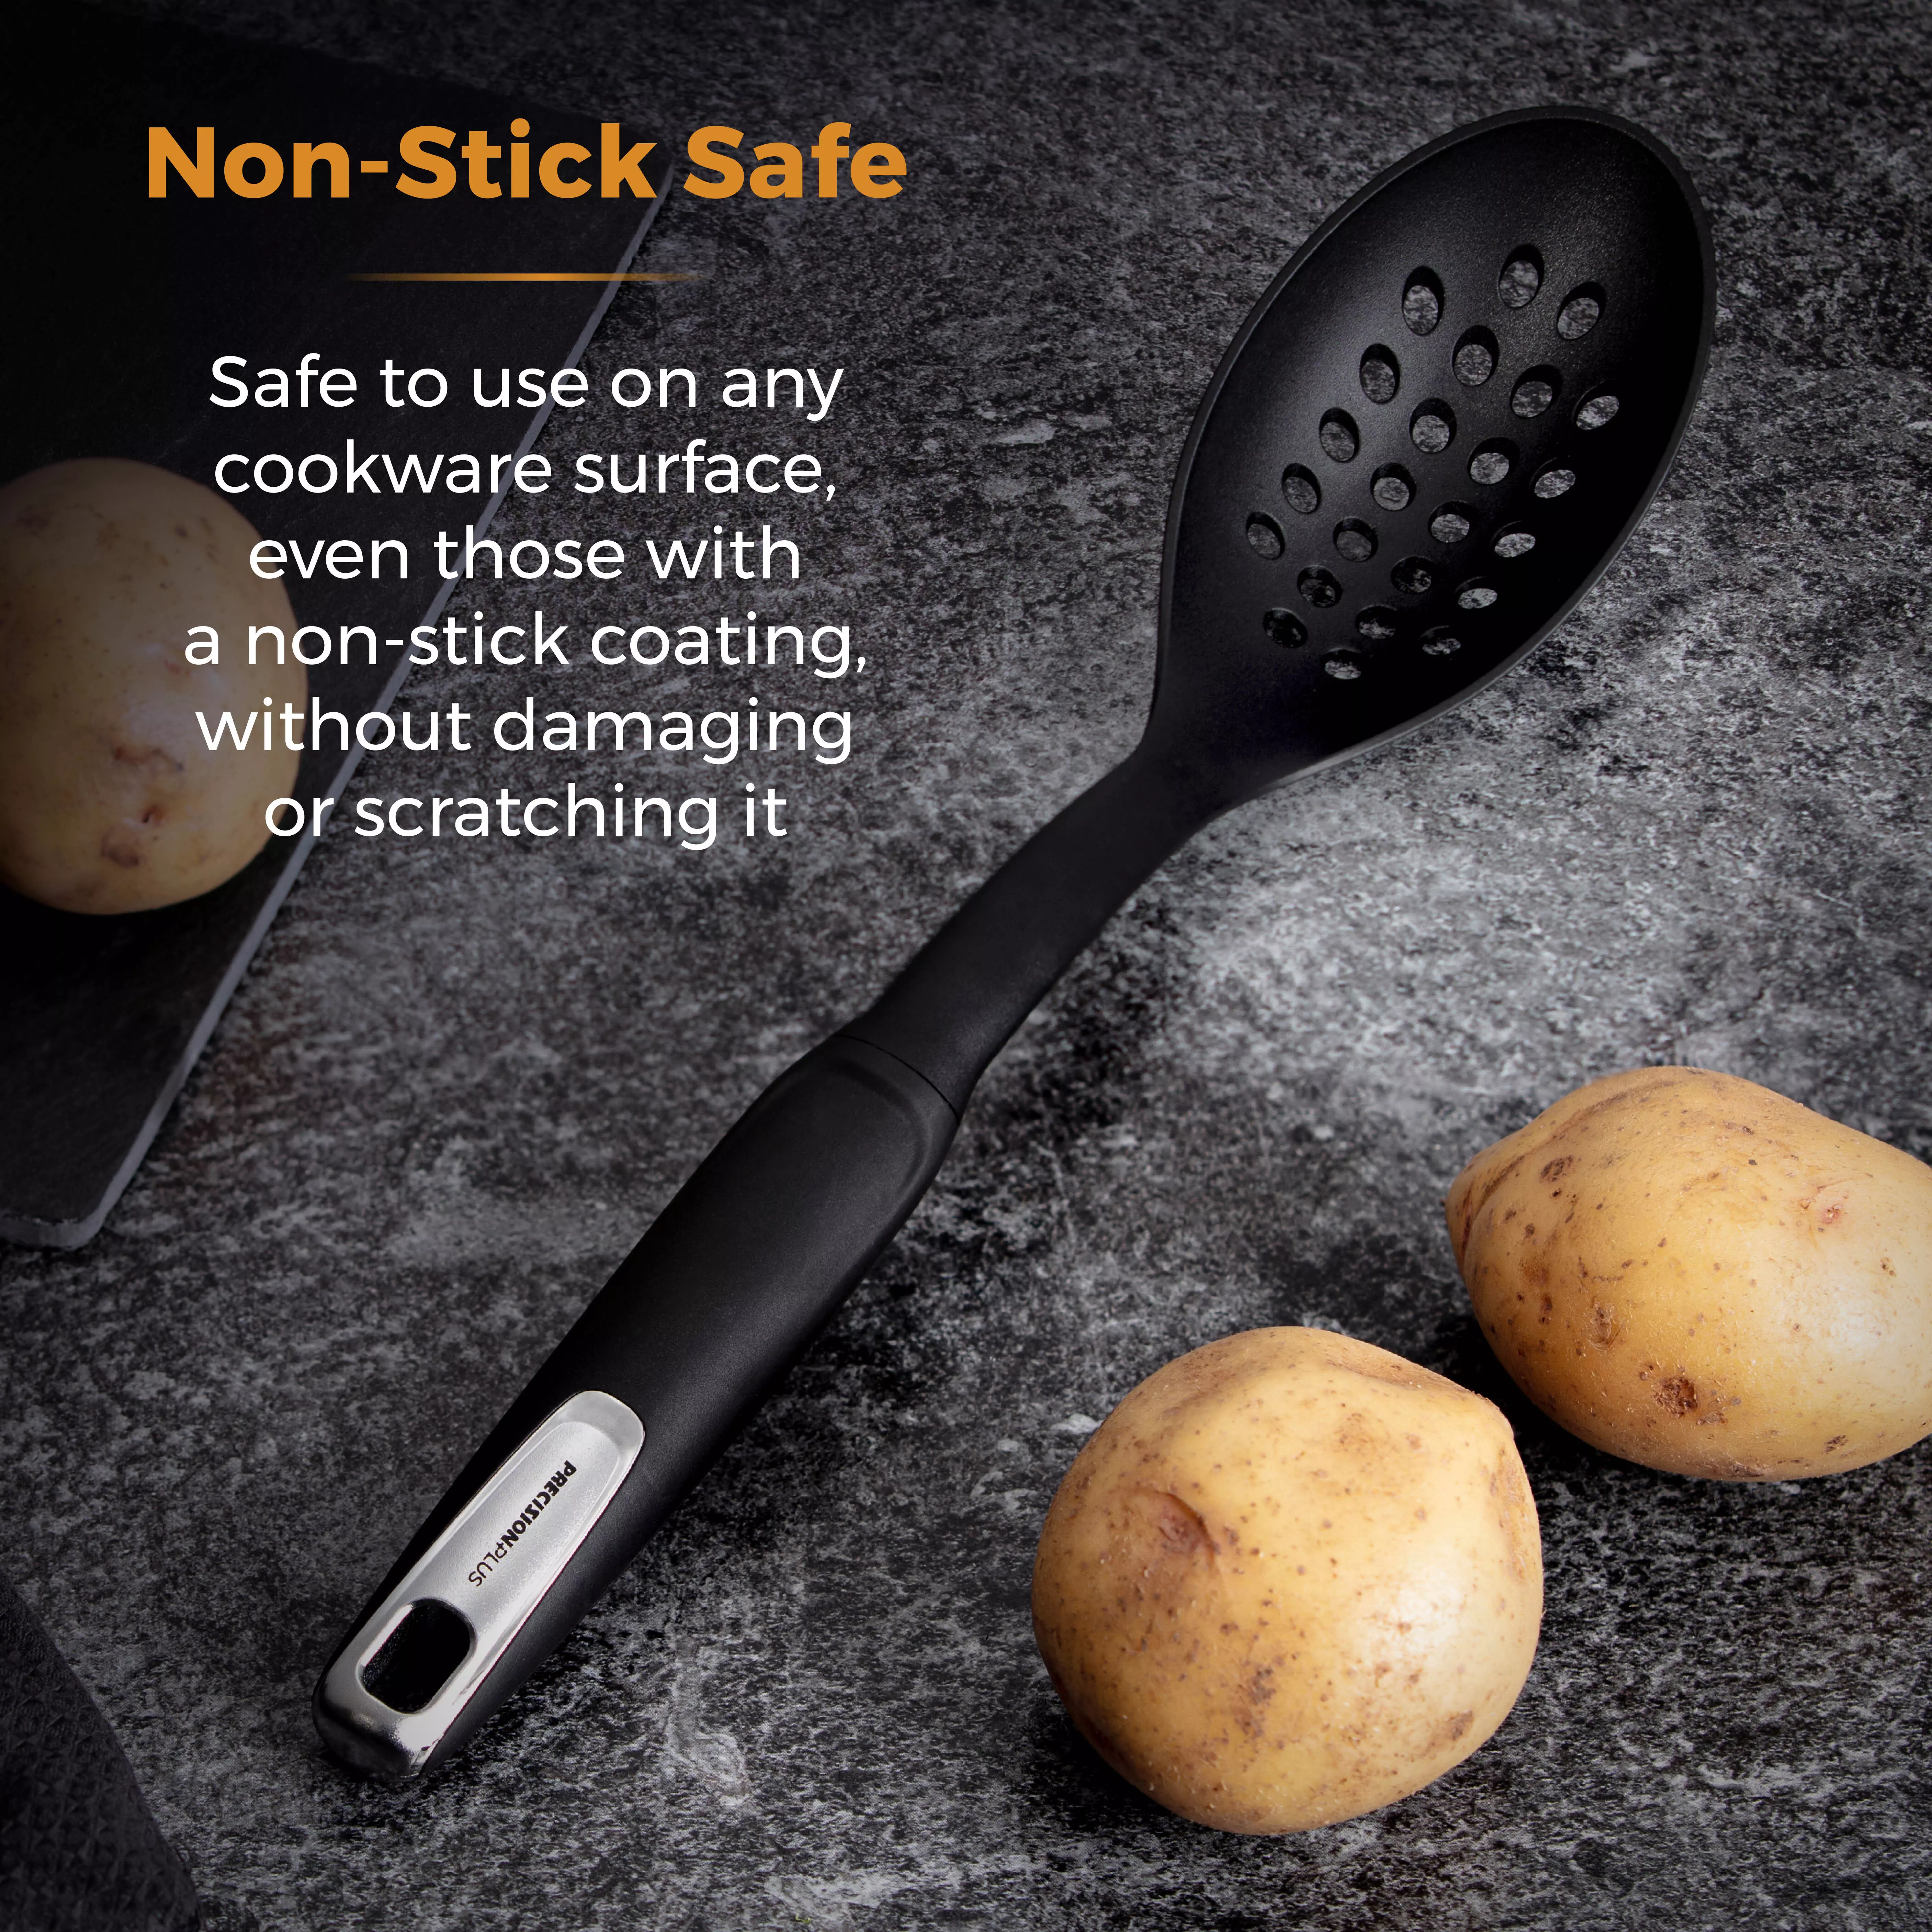  OXO Good Grips Nylon Slotted Spoon,Black : Home & Kitchen